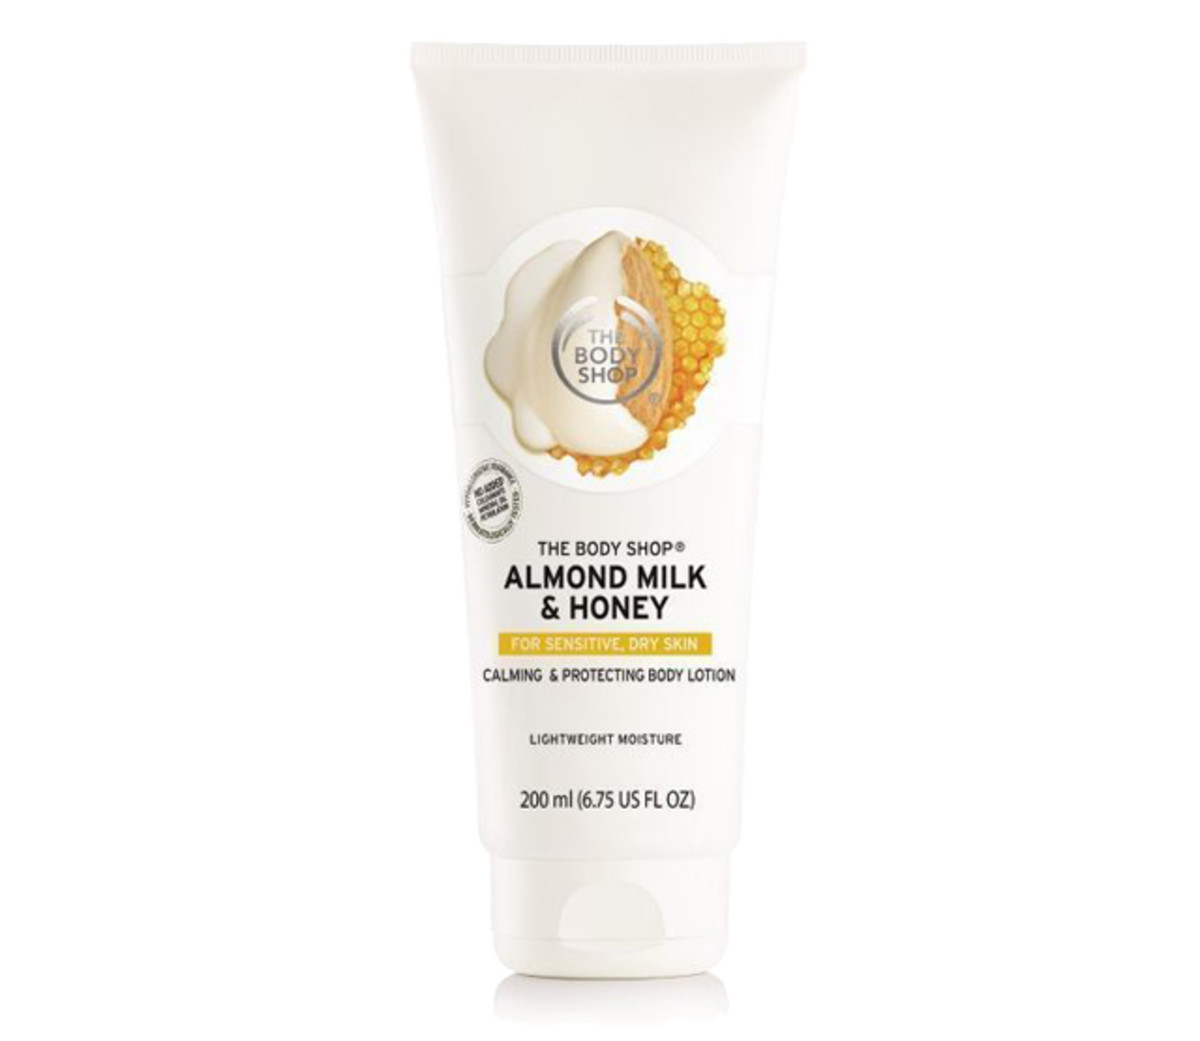 The Body Shop Almond Milk & Honey Body Lotion